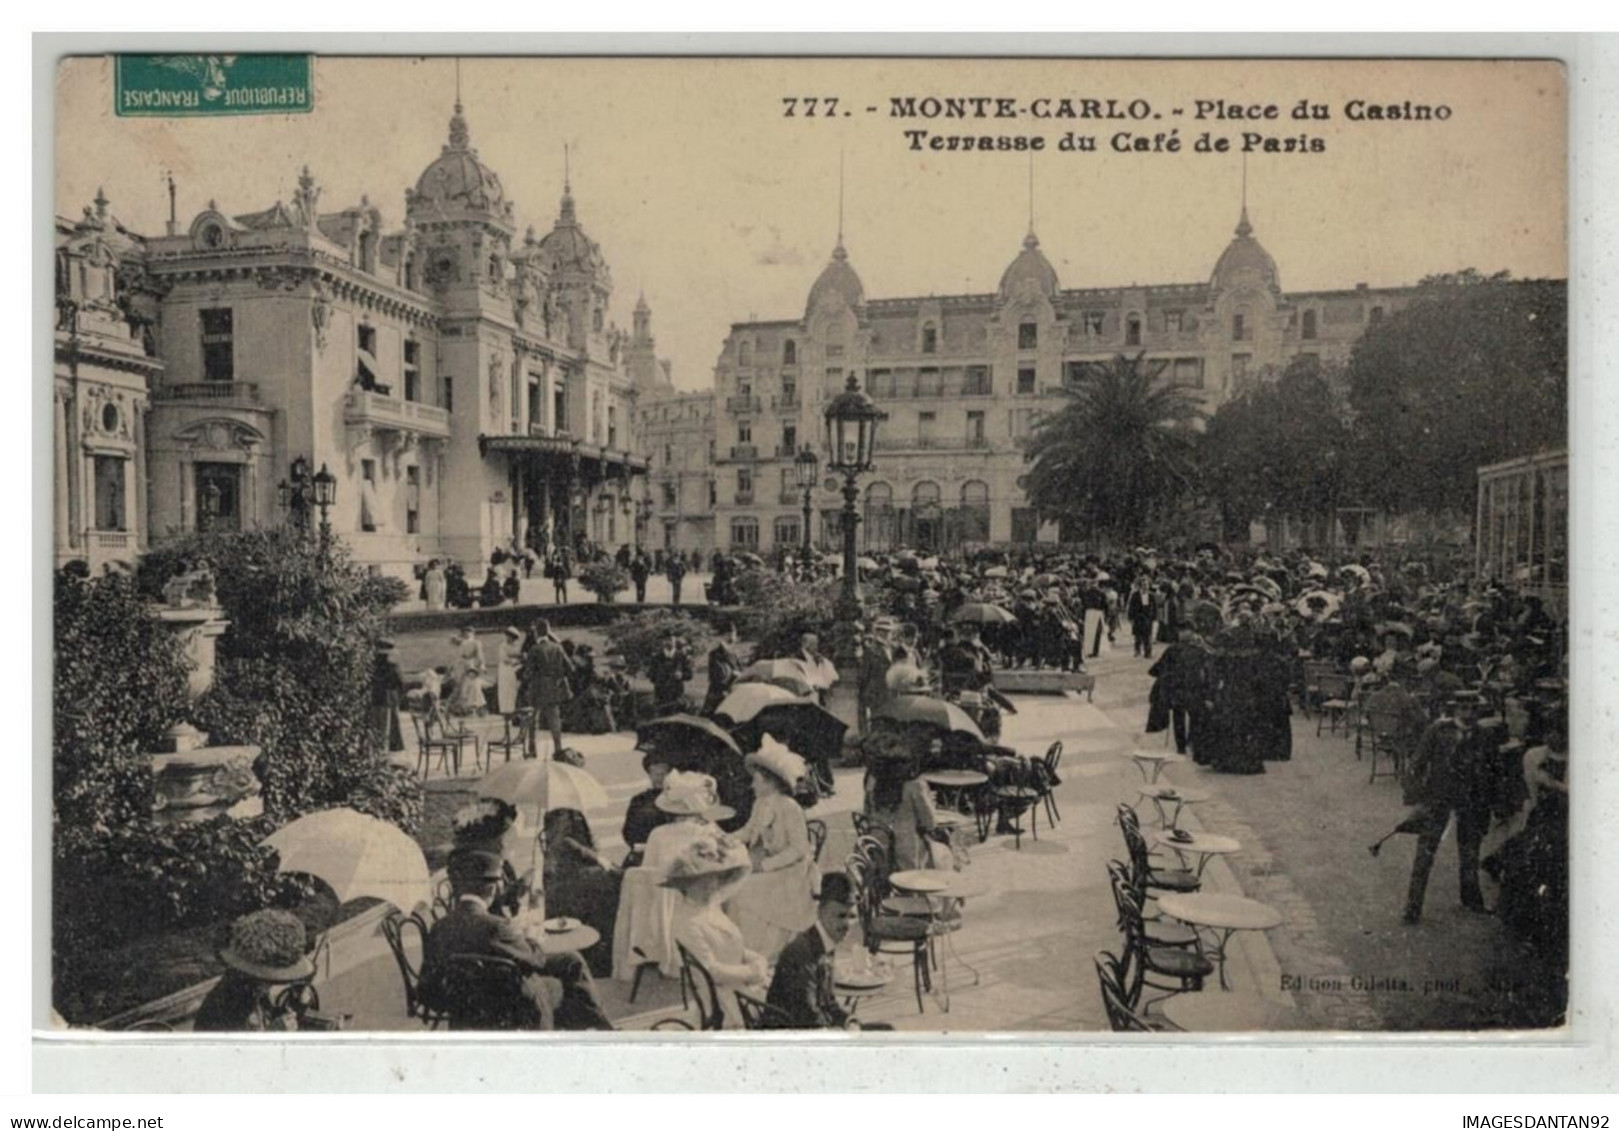 MONACO #18820 MONTE CARLO PLACE DU CASINO TERRASSE DU CAFE DE PARIS - Monte-Carlo